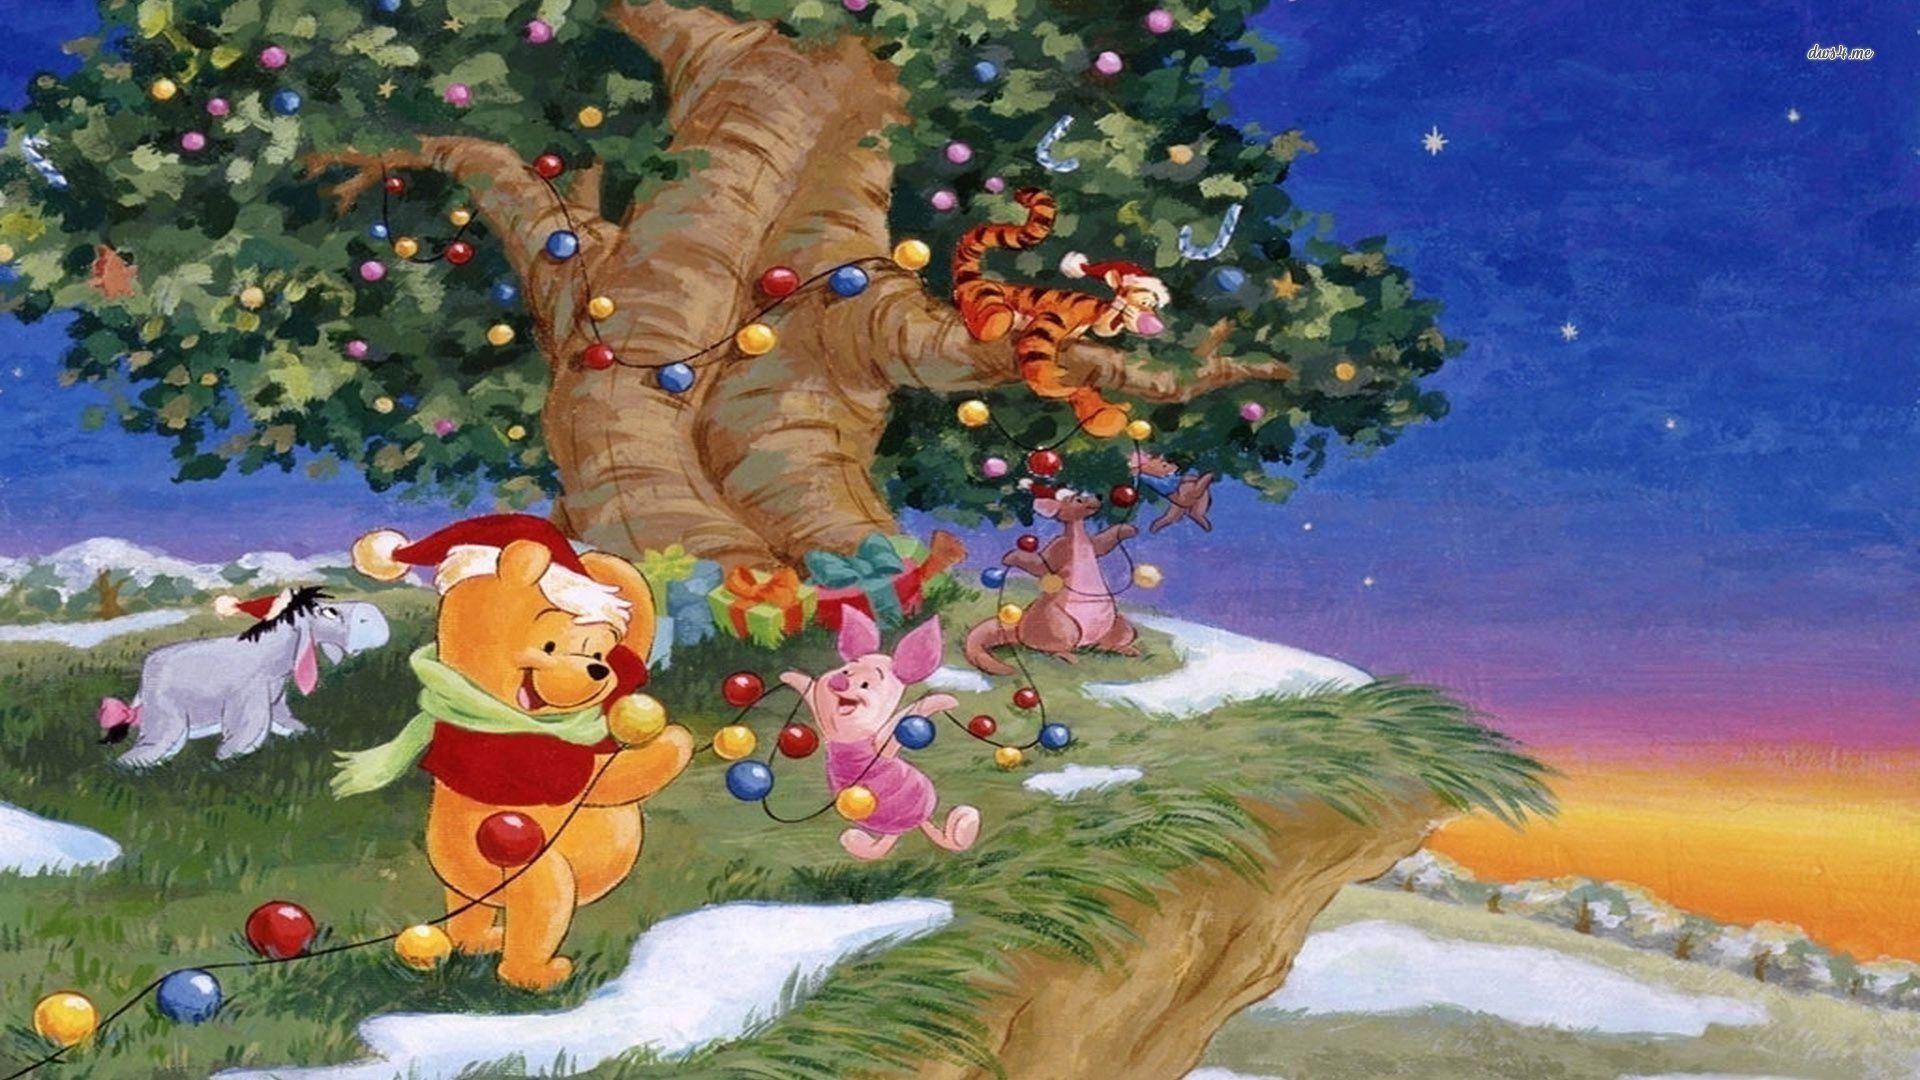 Cartoon Winnie The Pooh Pooh Wallpaper. Winnie the pooh